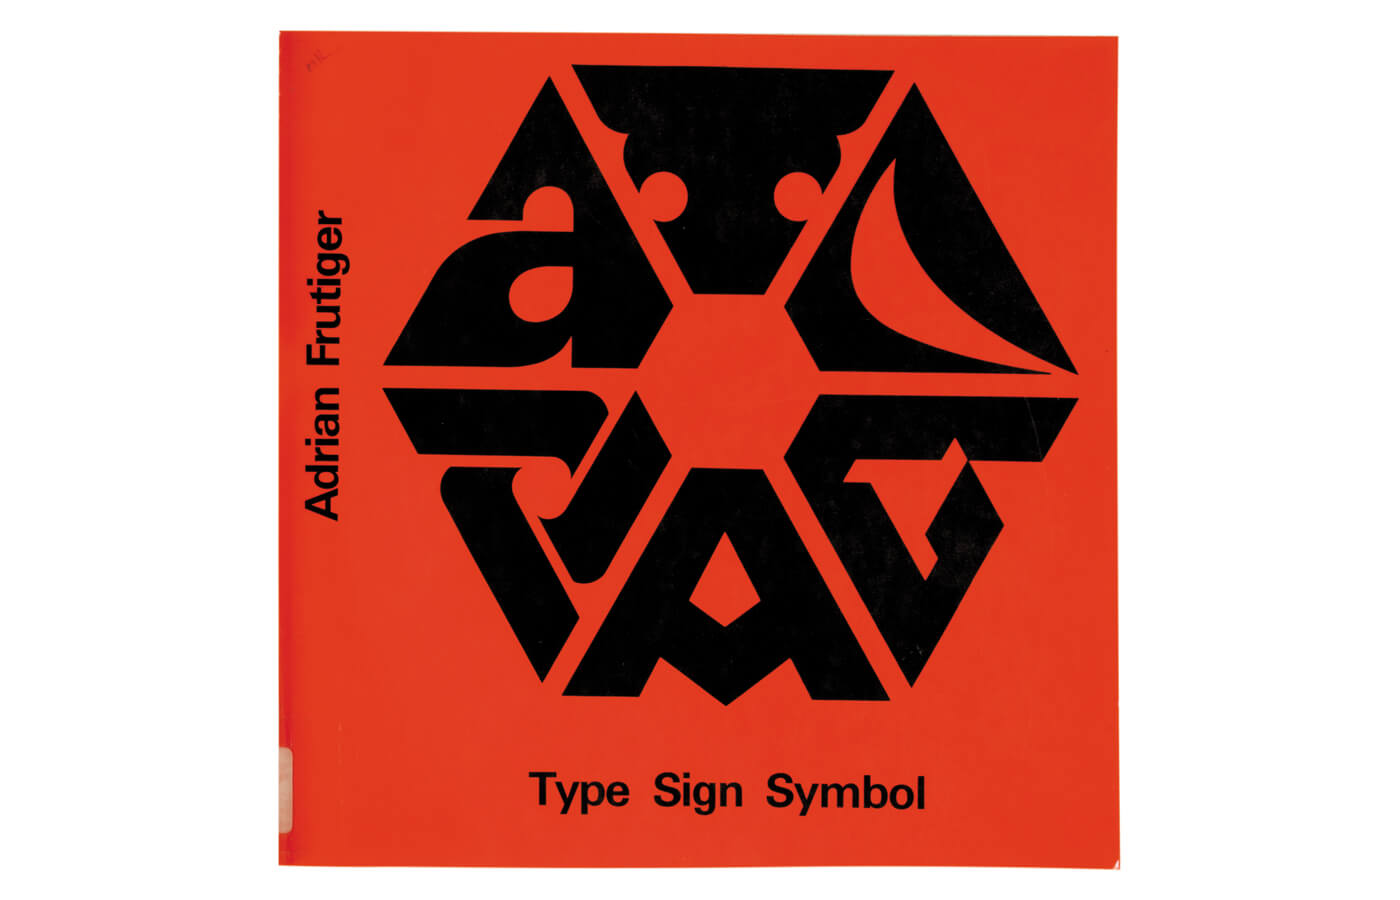 Type Sign Symbol